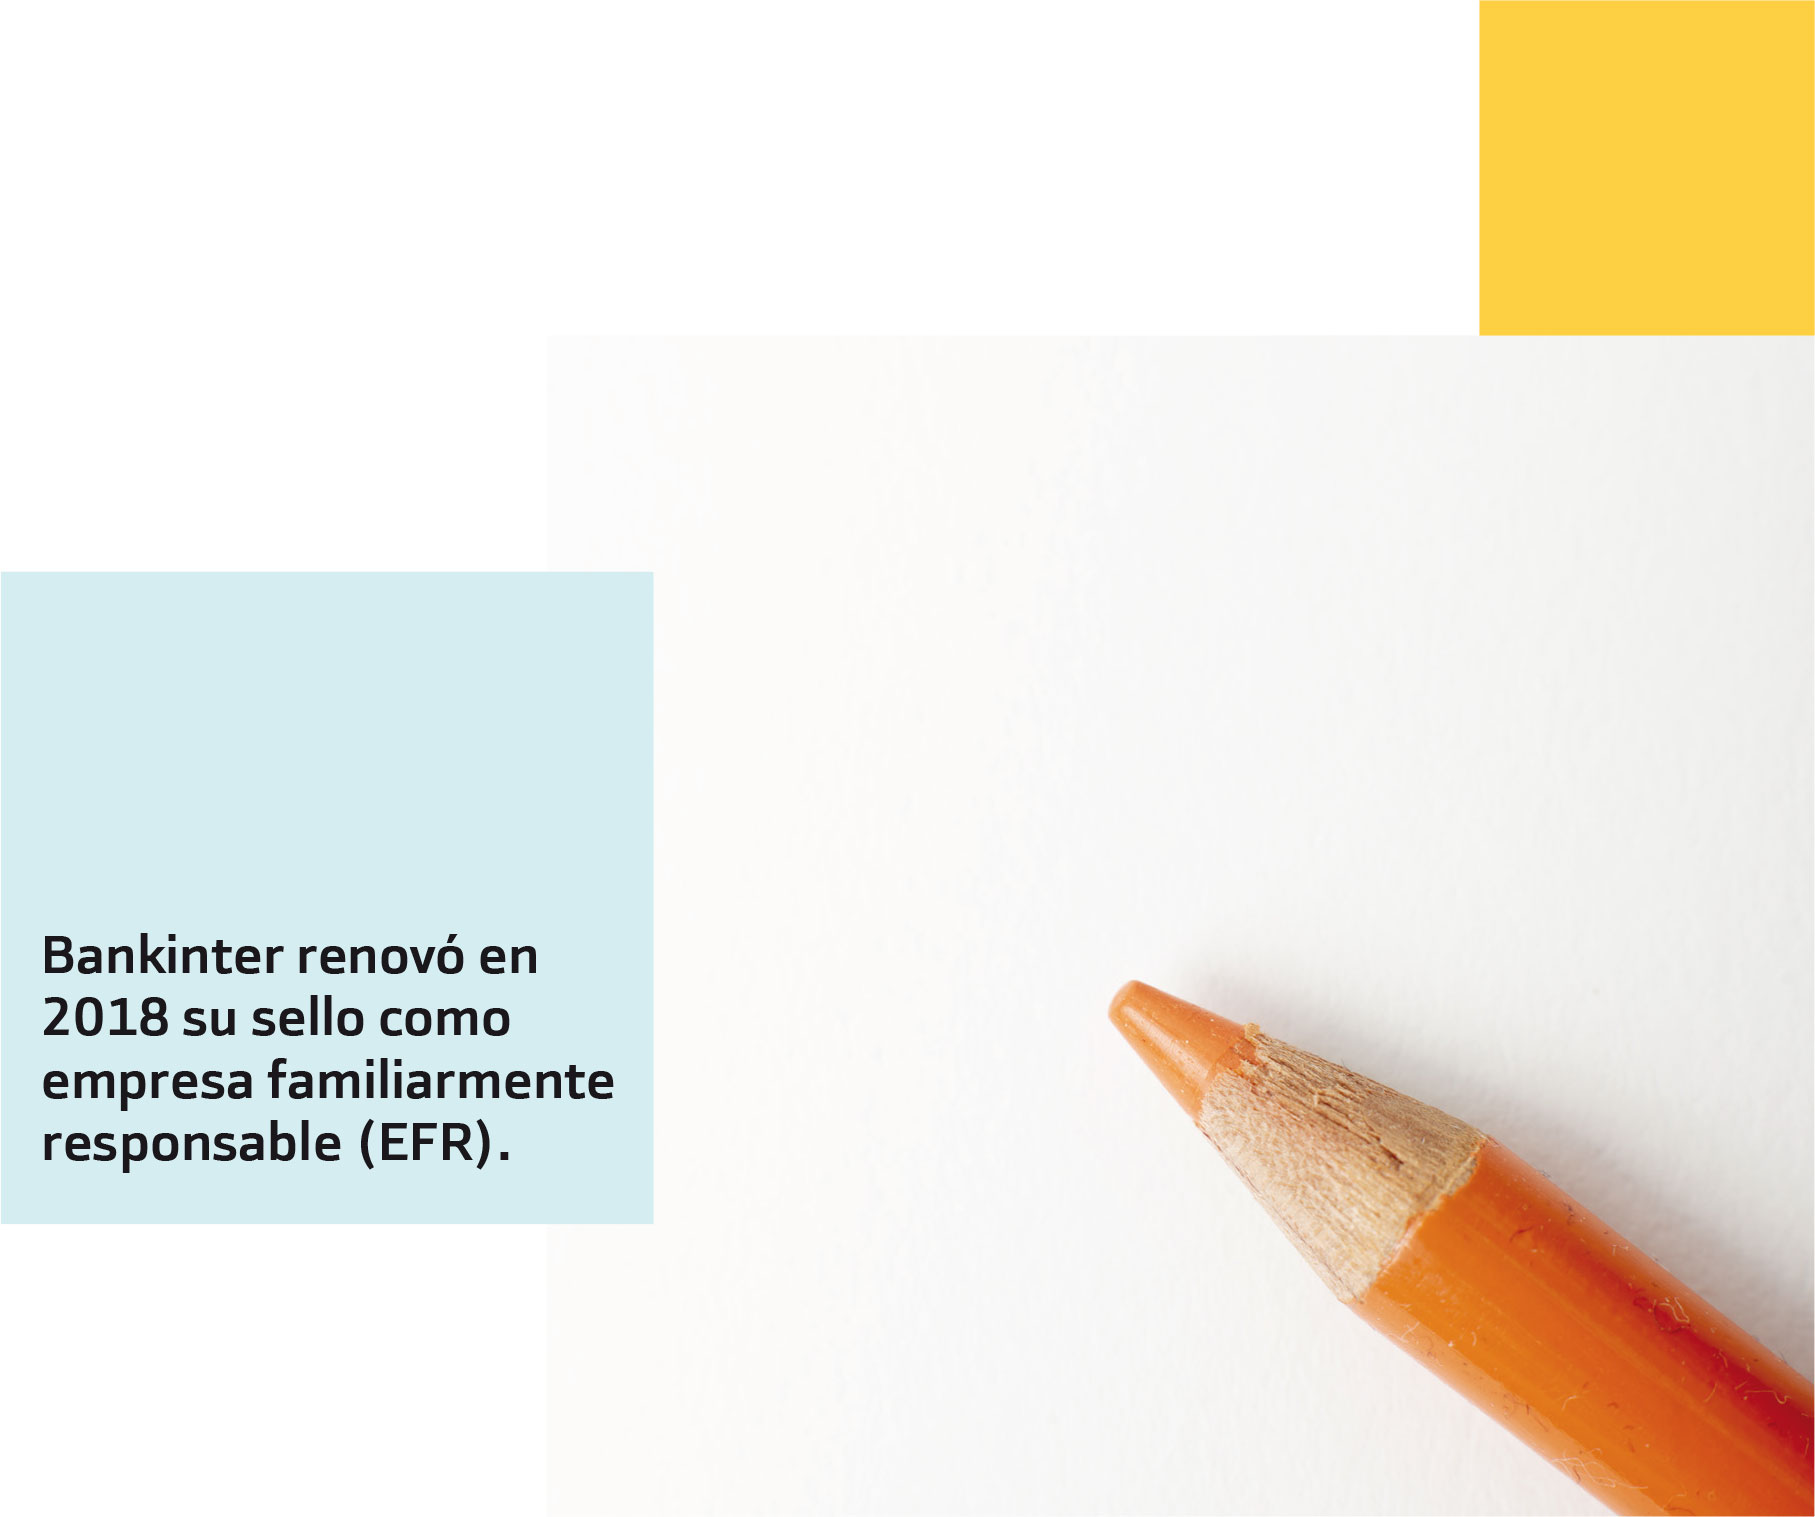 Bankinter renovó en 2018 su sello como empresa familiarmente responsable (EFR).